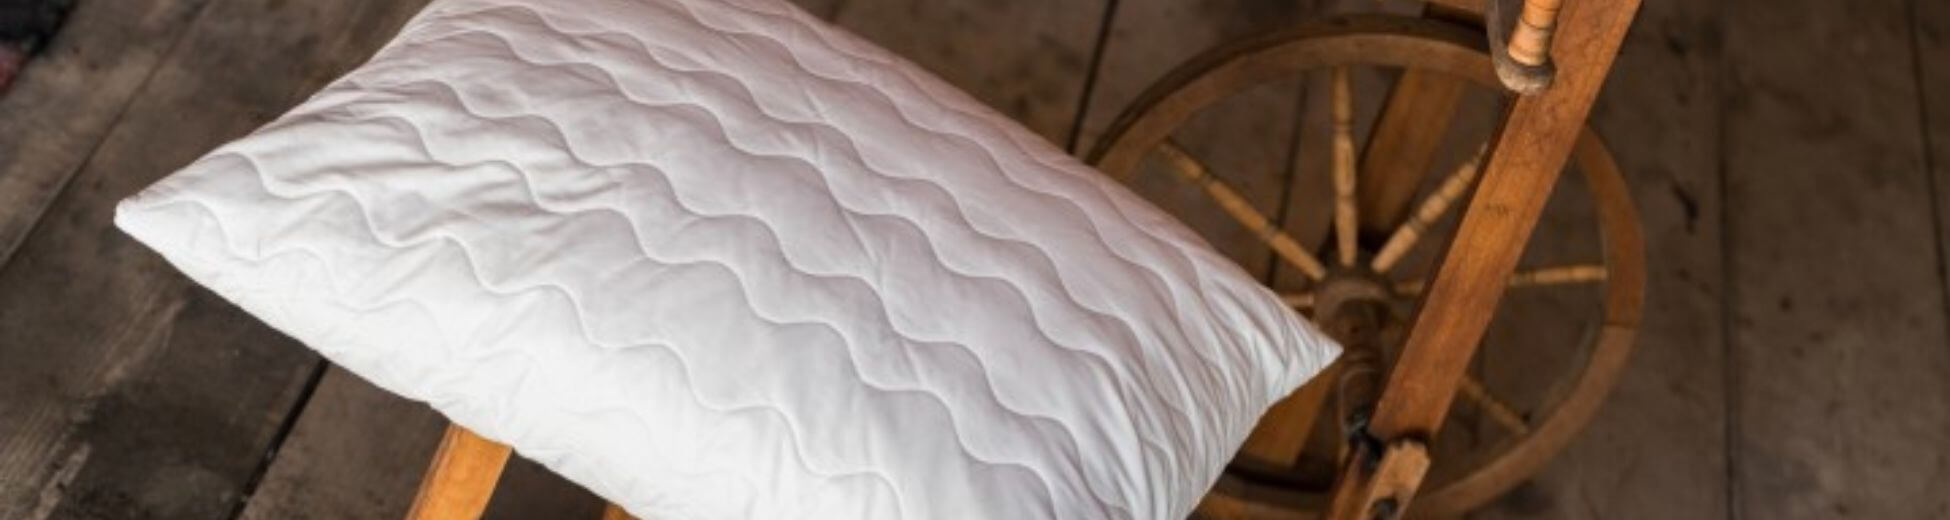 Pillows from organic materials